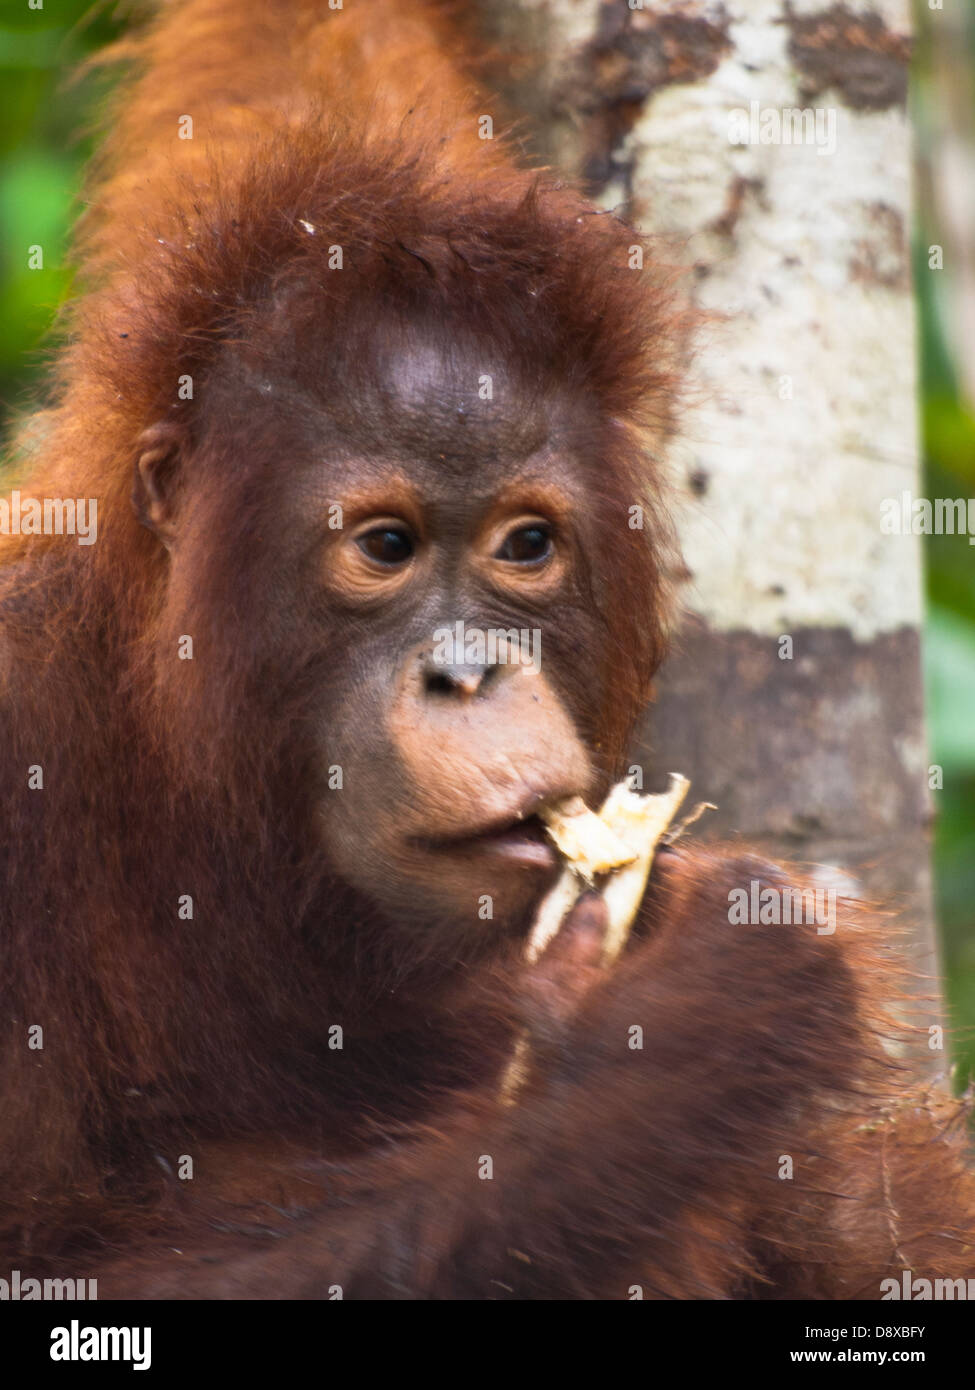 Orangutan cub eating Stock Photo